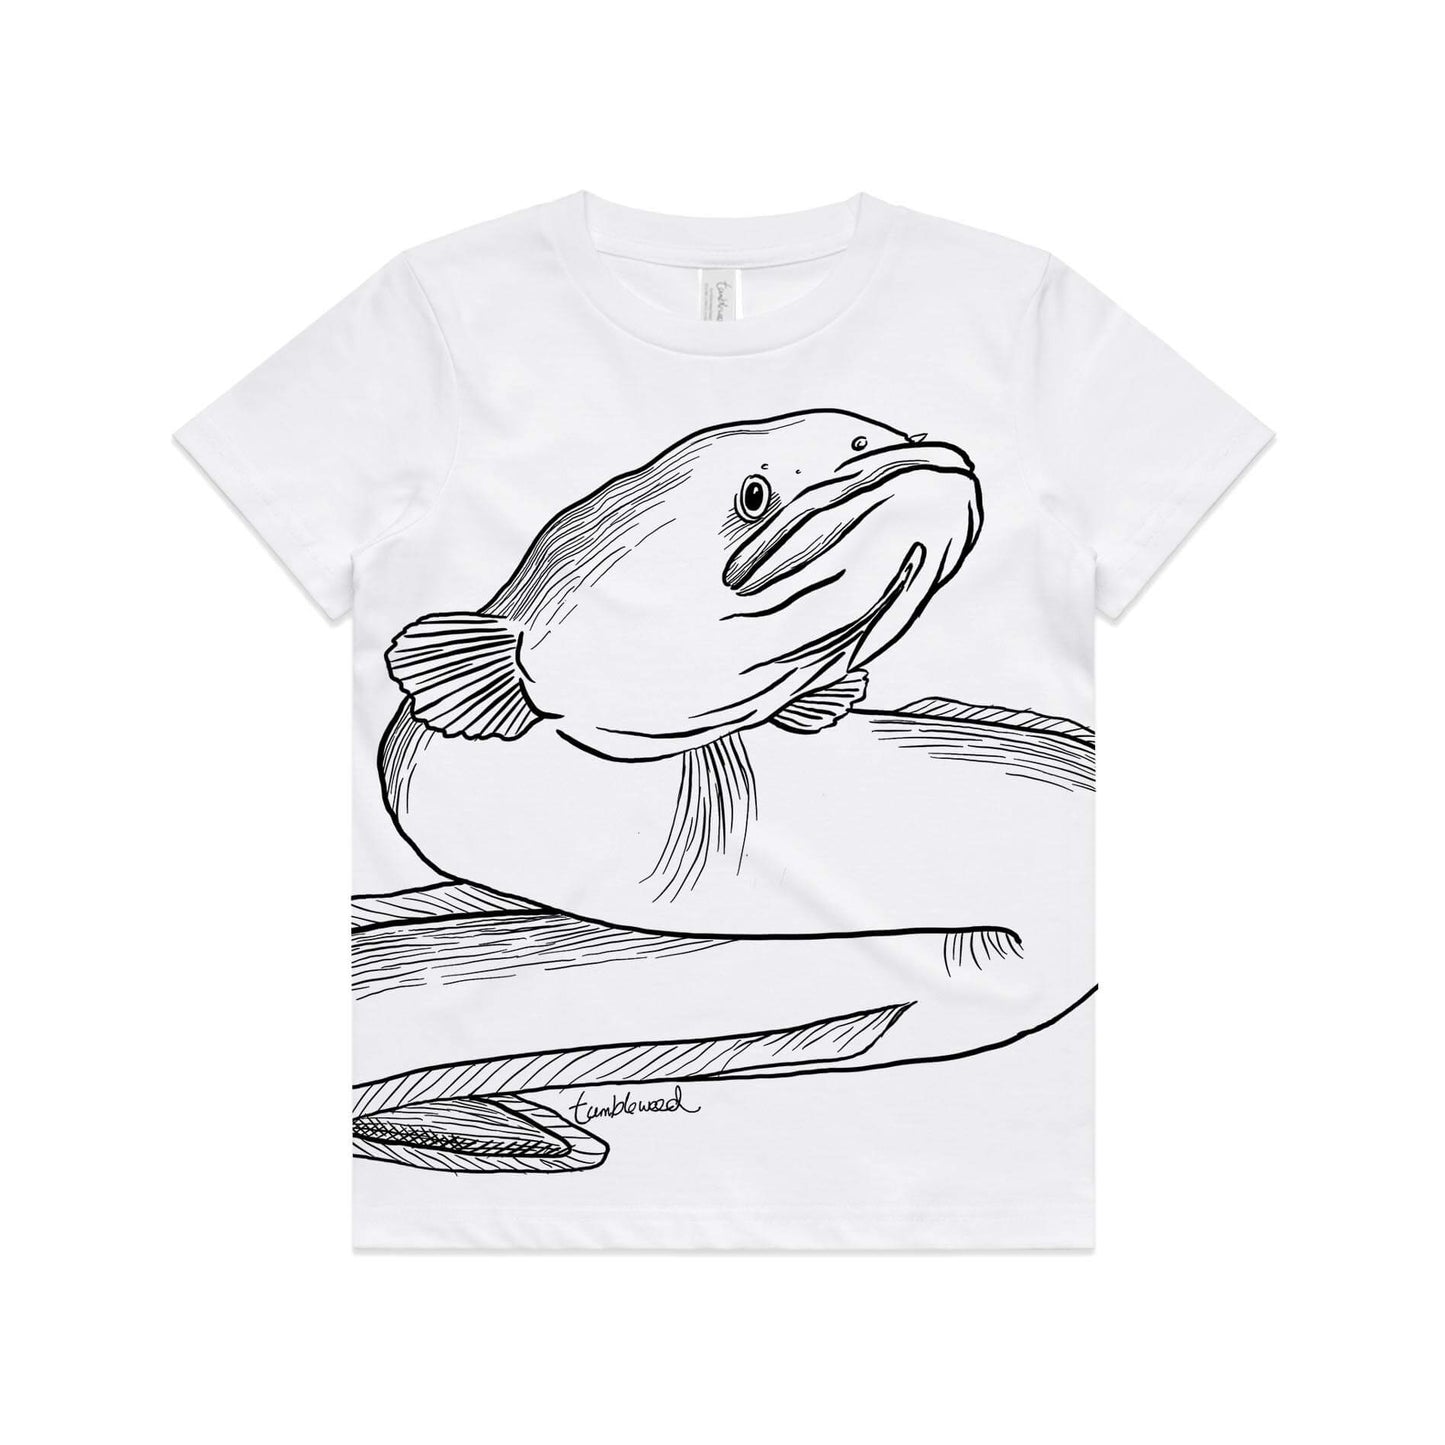 White, cotton kids' t-shirt with screen printed Long fin eel/tuna design.